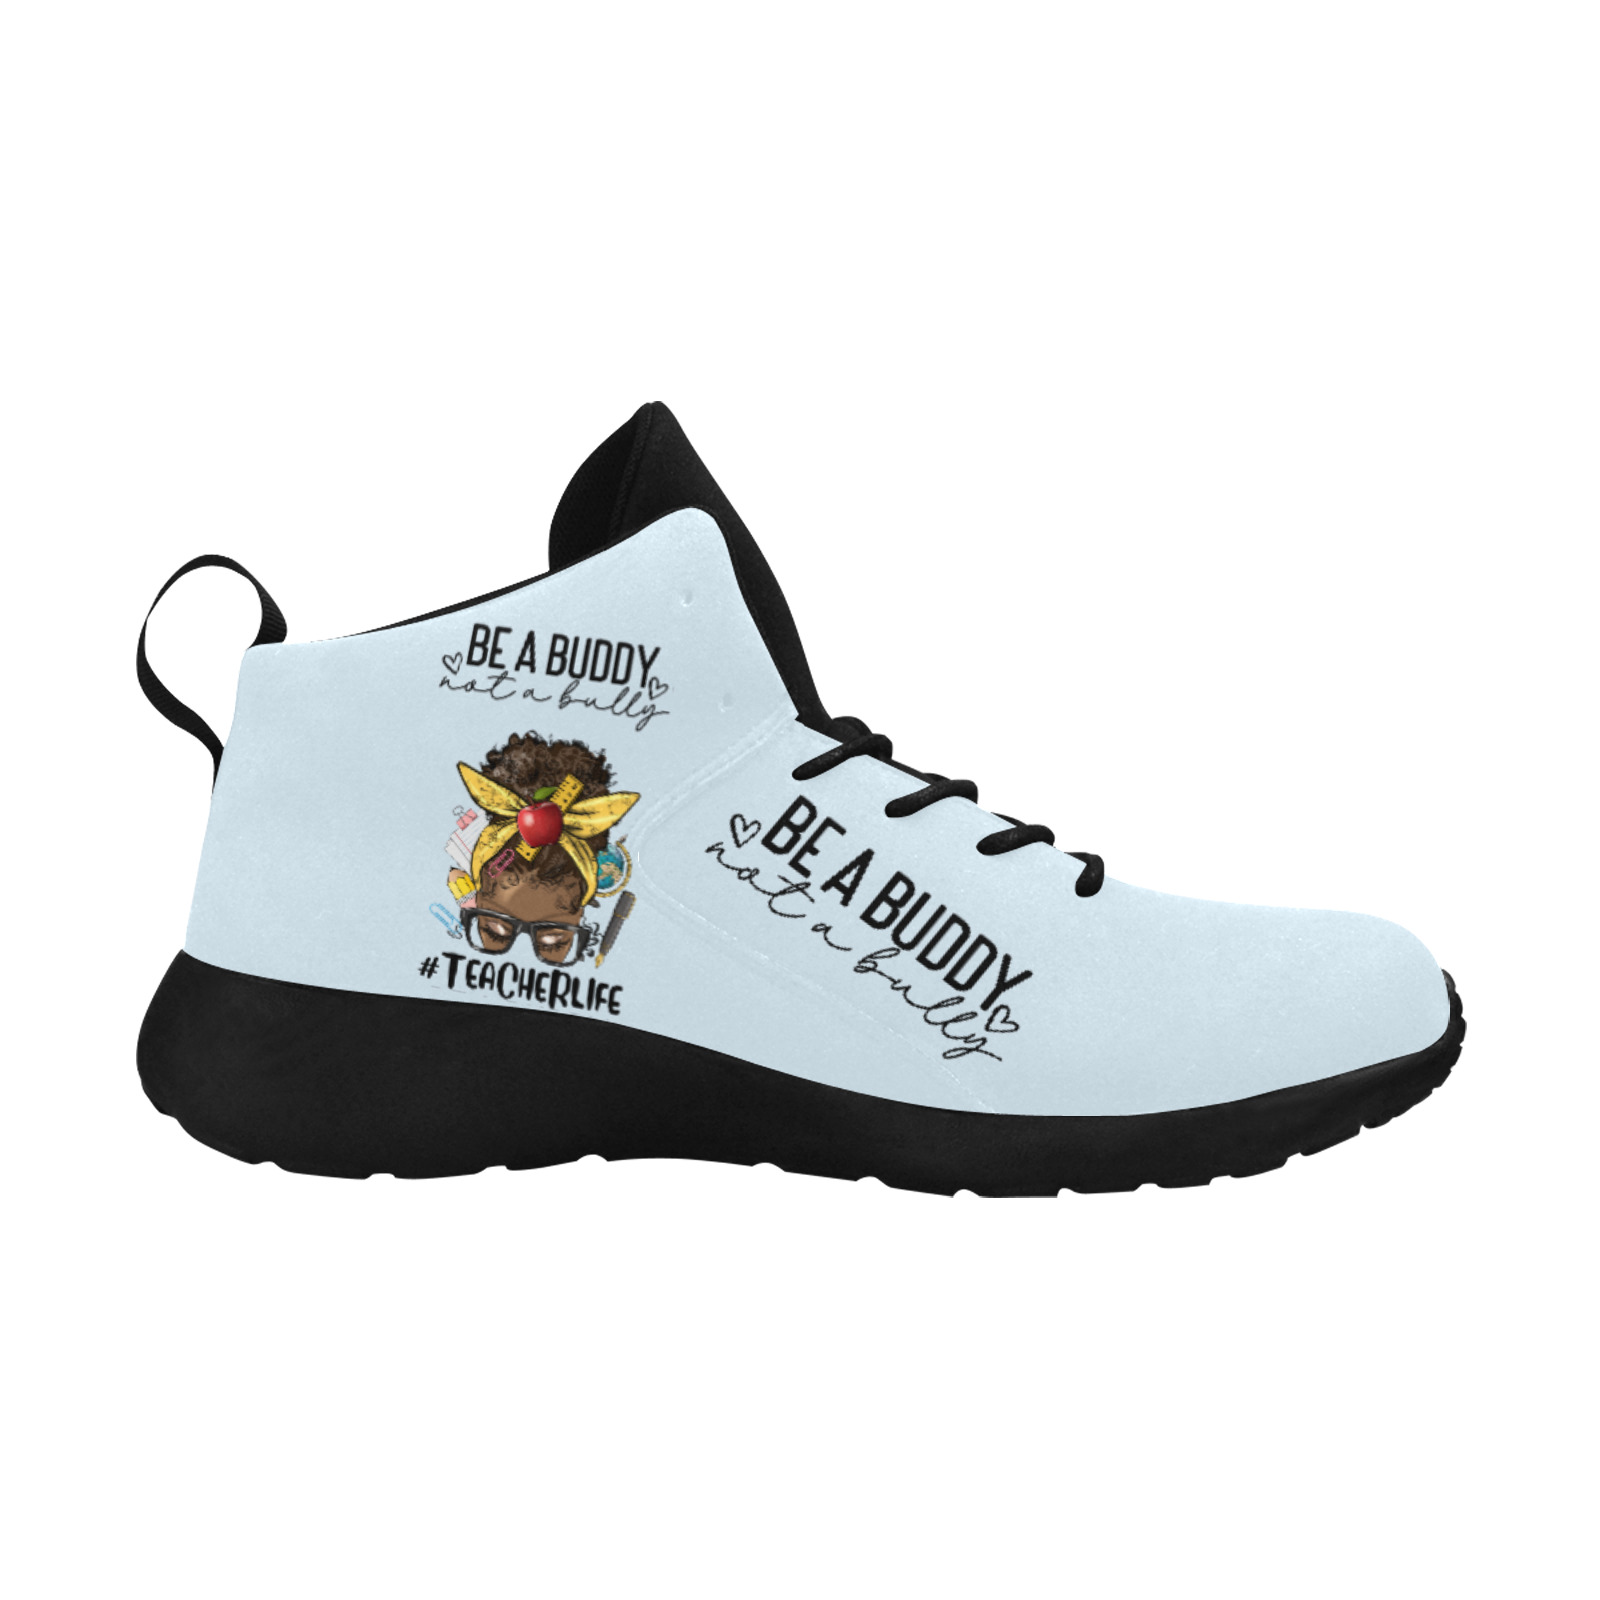 Be-a-buddy-not-a-bullyLBShoe Women's Chukka Training Shoes (Model 57502)